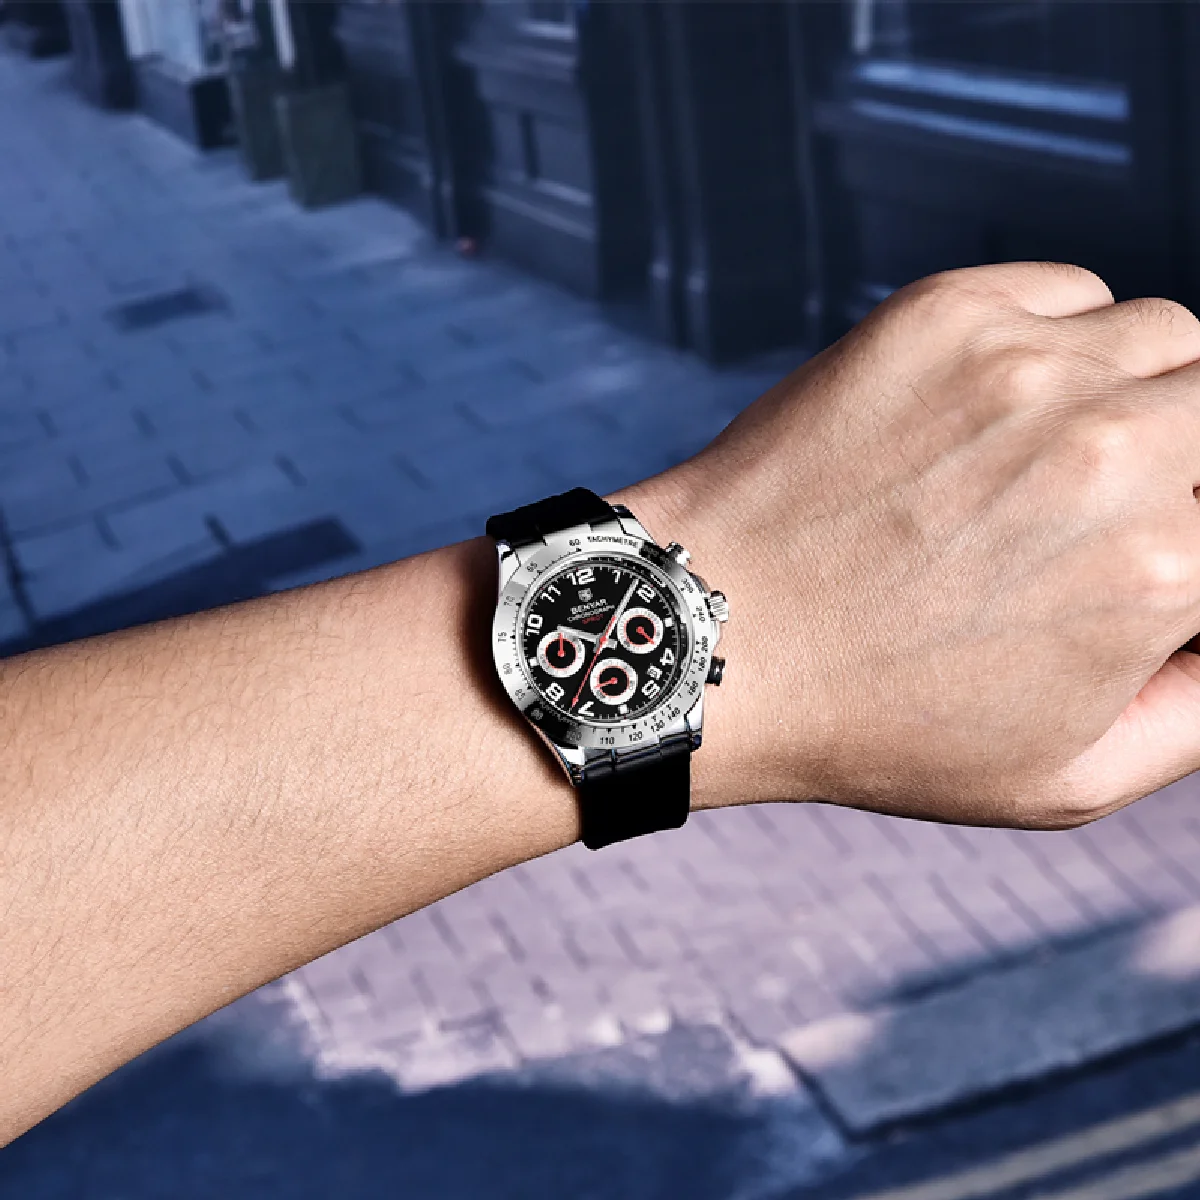 

BENYAR 40MM Quartz Watch Business Men's 30M Waterproof Wristwatch Top Brand Men's Stainless Steel Chronograph Relogio Masculino